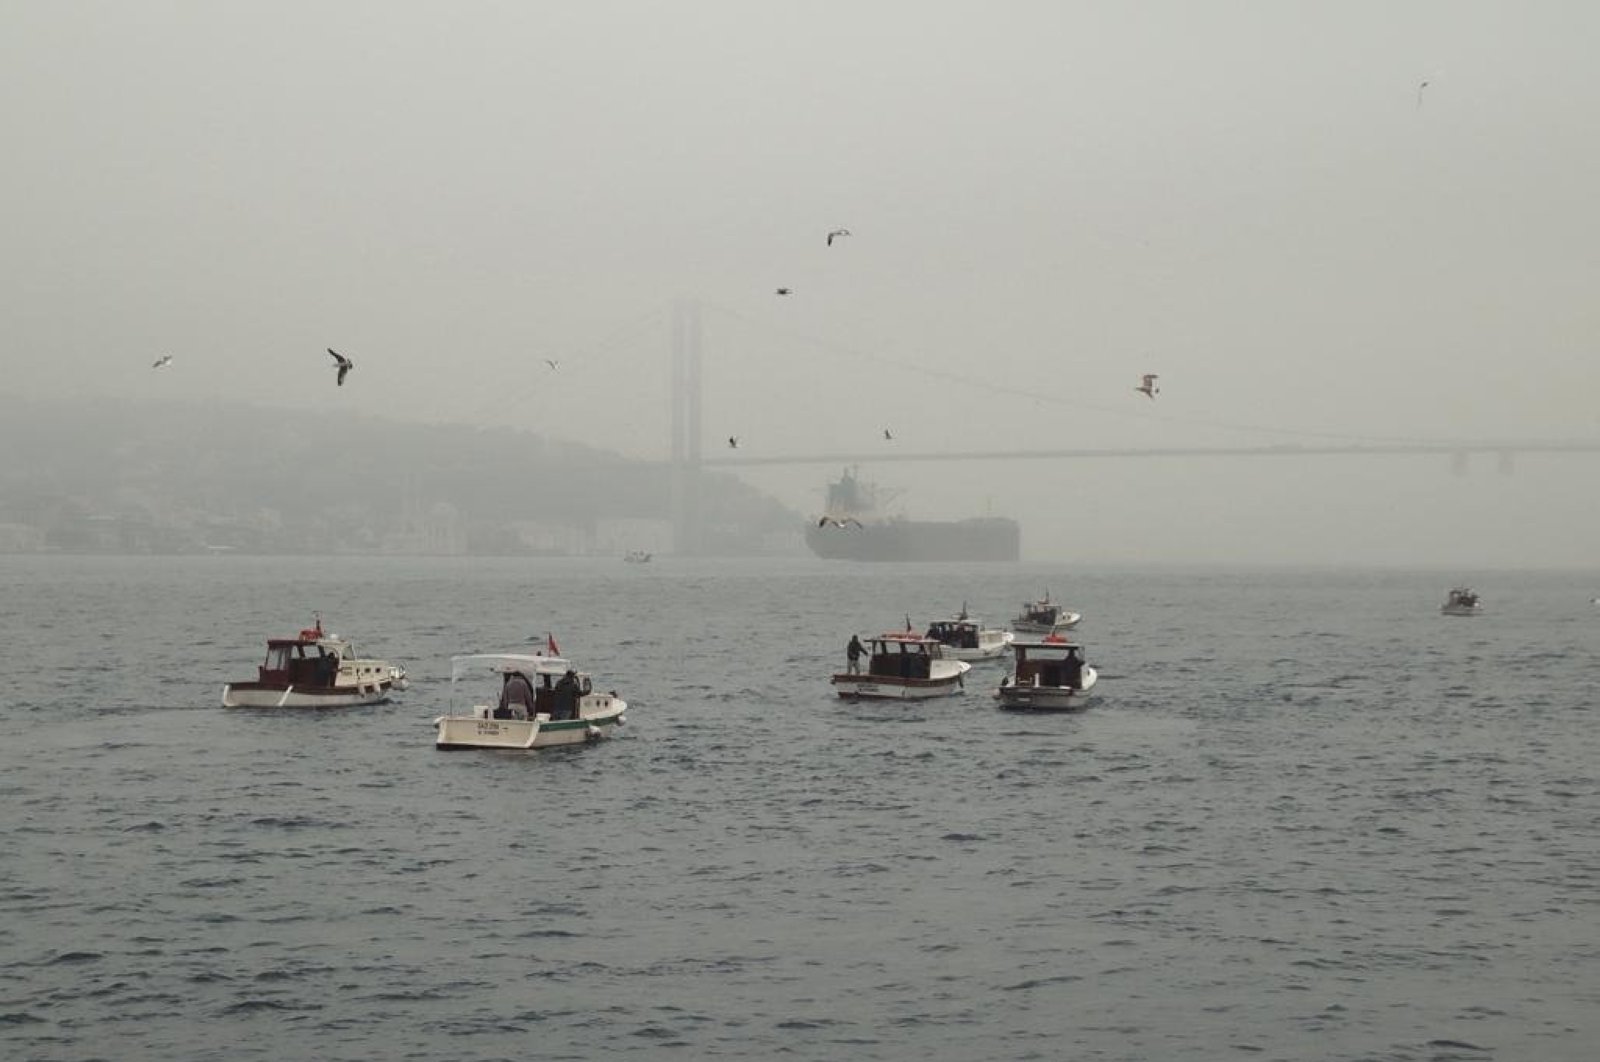 Turki menutup Bosporus di tengah visibilitas rendah